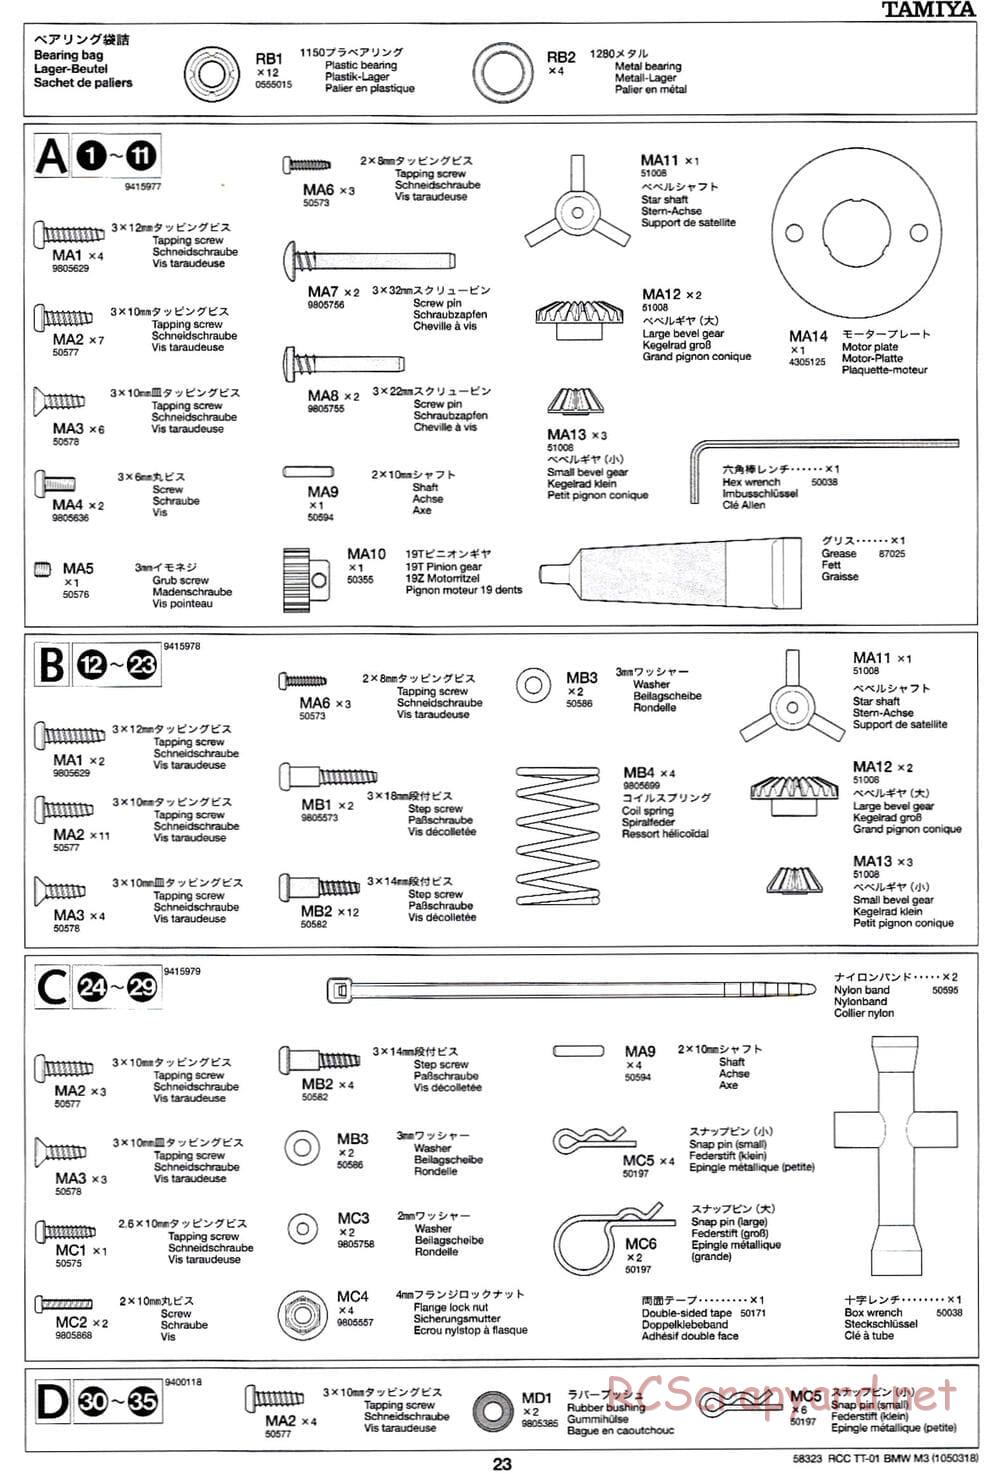 Tamiya - Schnitzer BMW M3 Sport Evo - TT-01 Chassis - Manual - Page 23